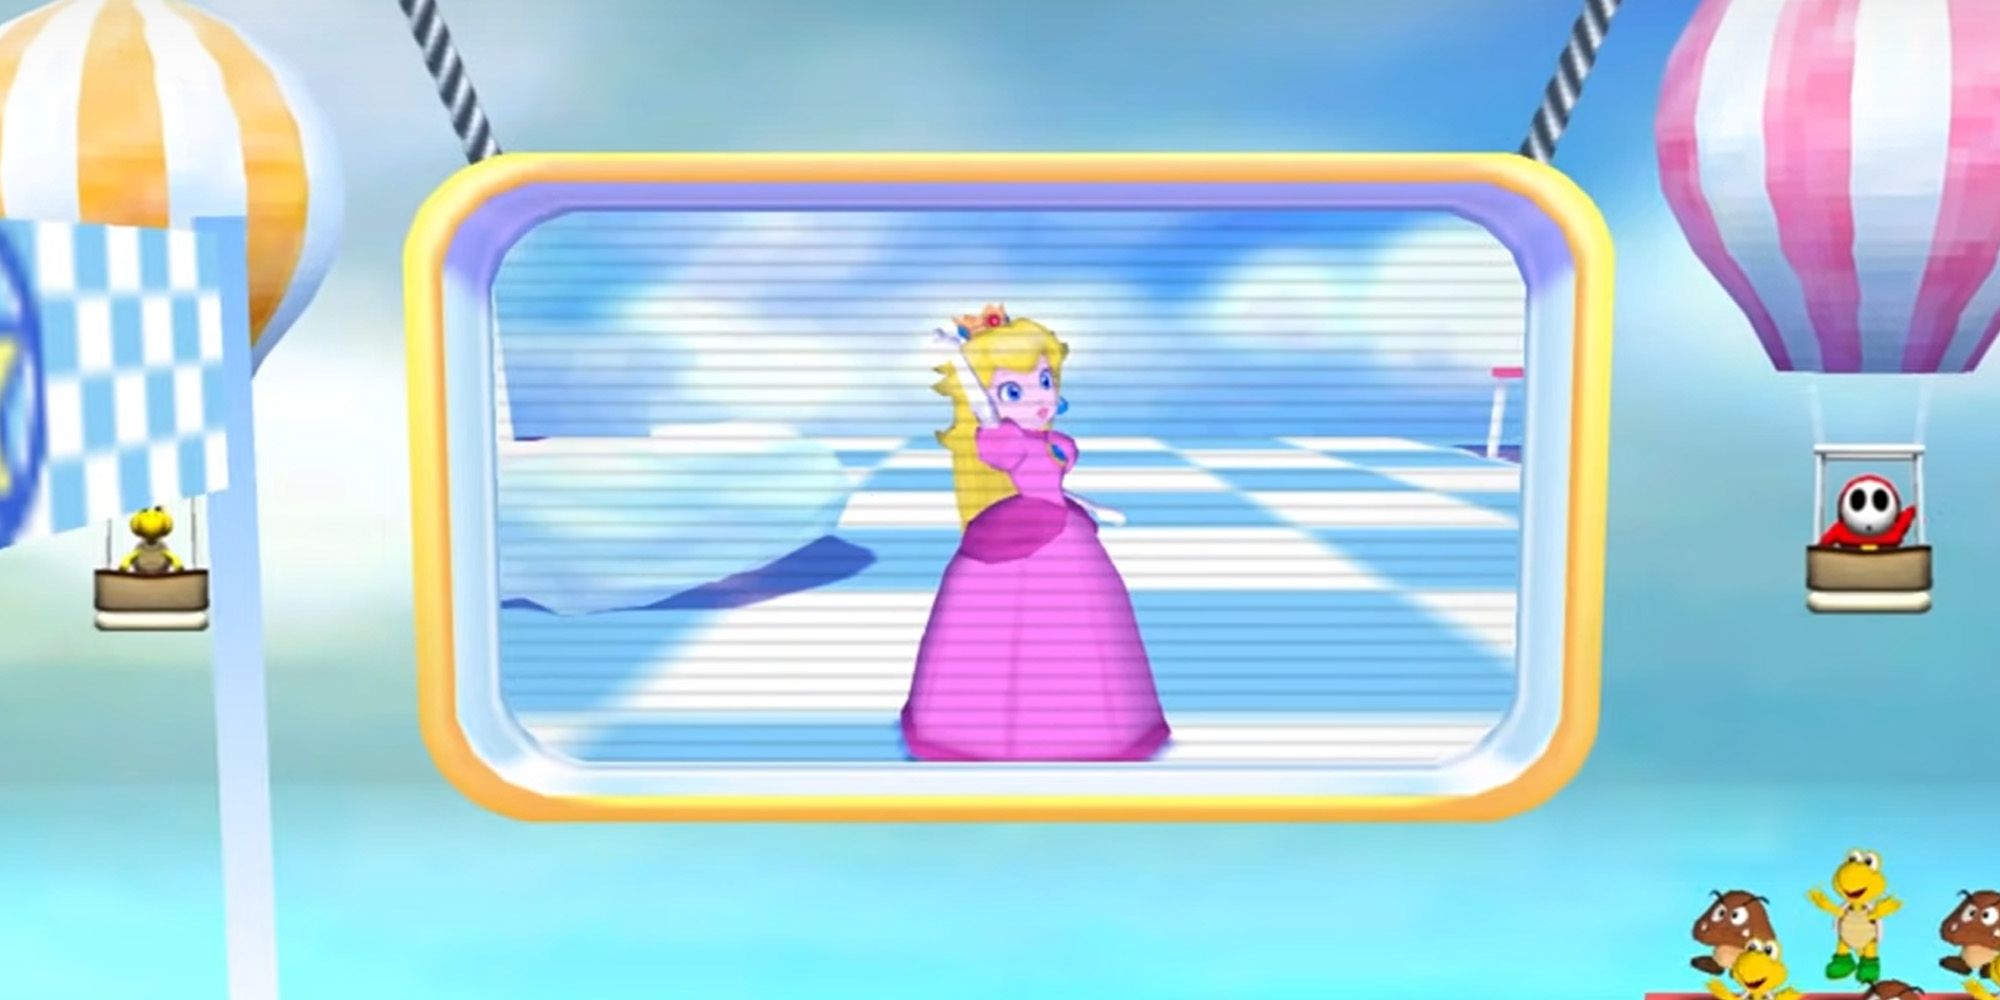 Every Super Mario Game Where You Can Play As Princess Peach